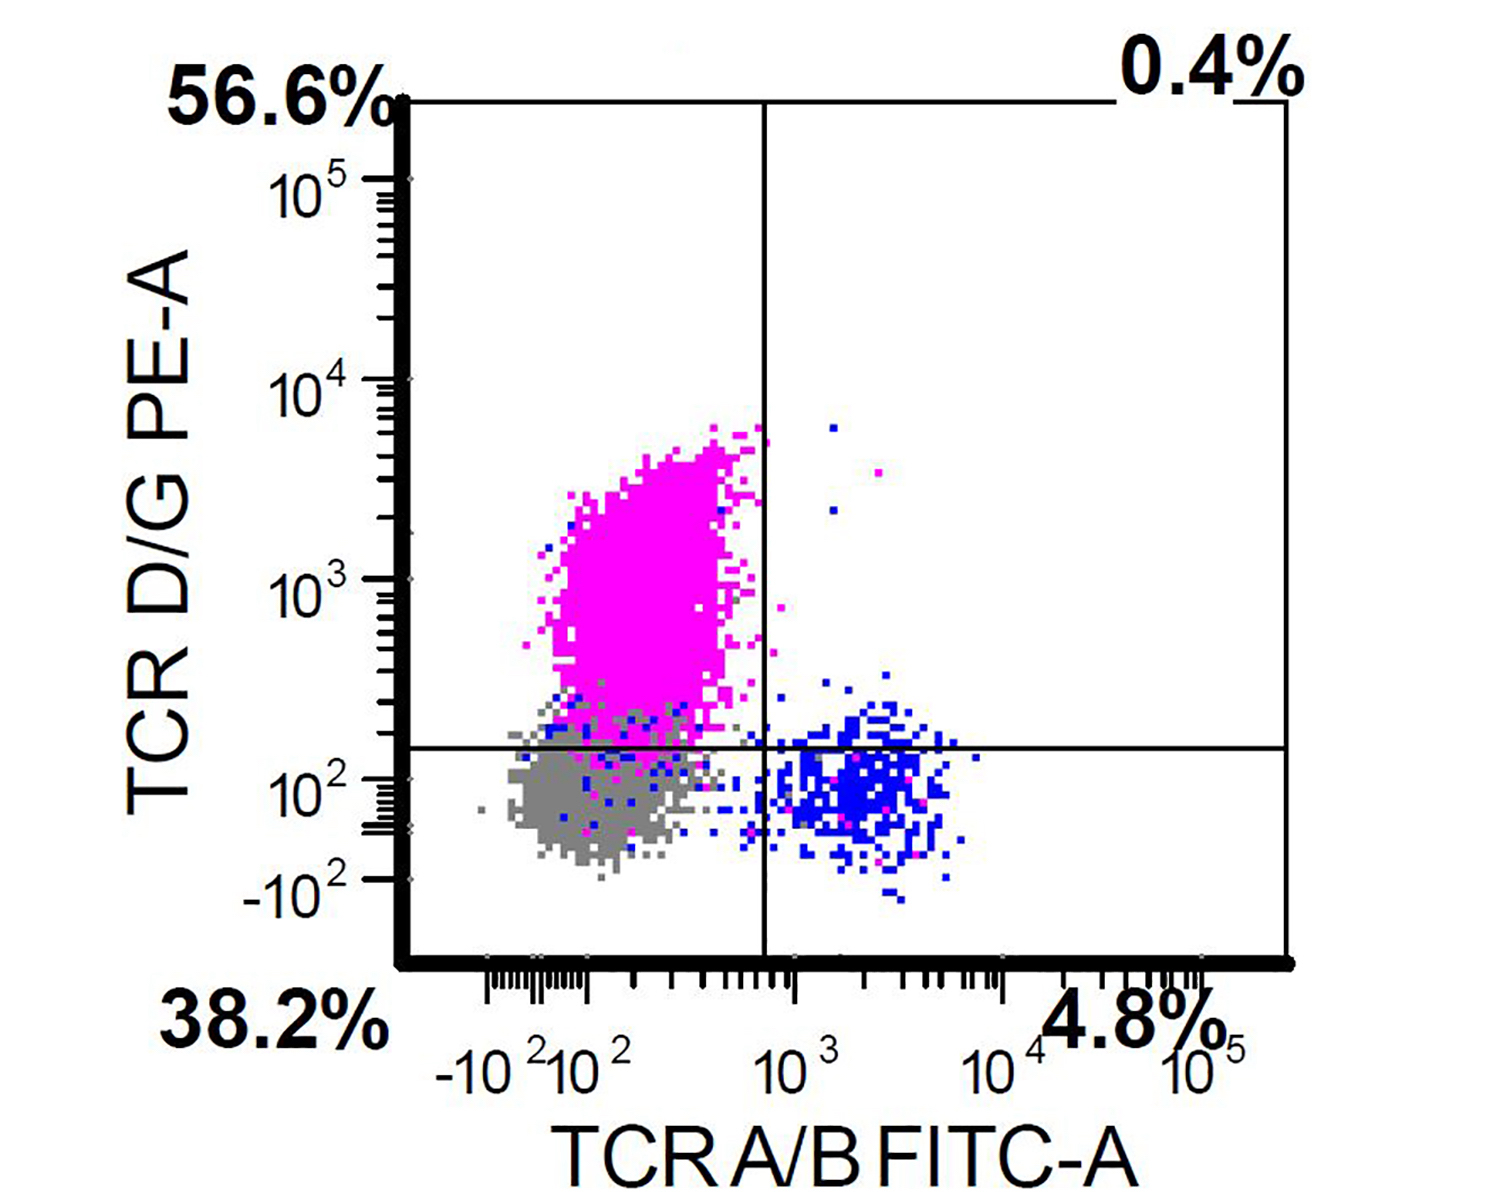 TCR gamma delta positivity and TCR alpha beta chain negativity